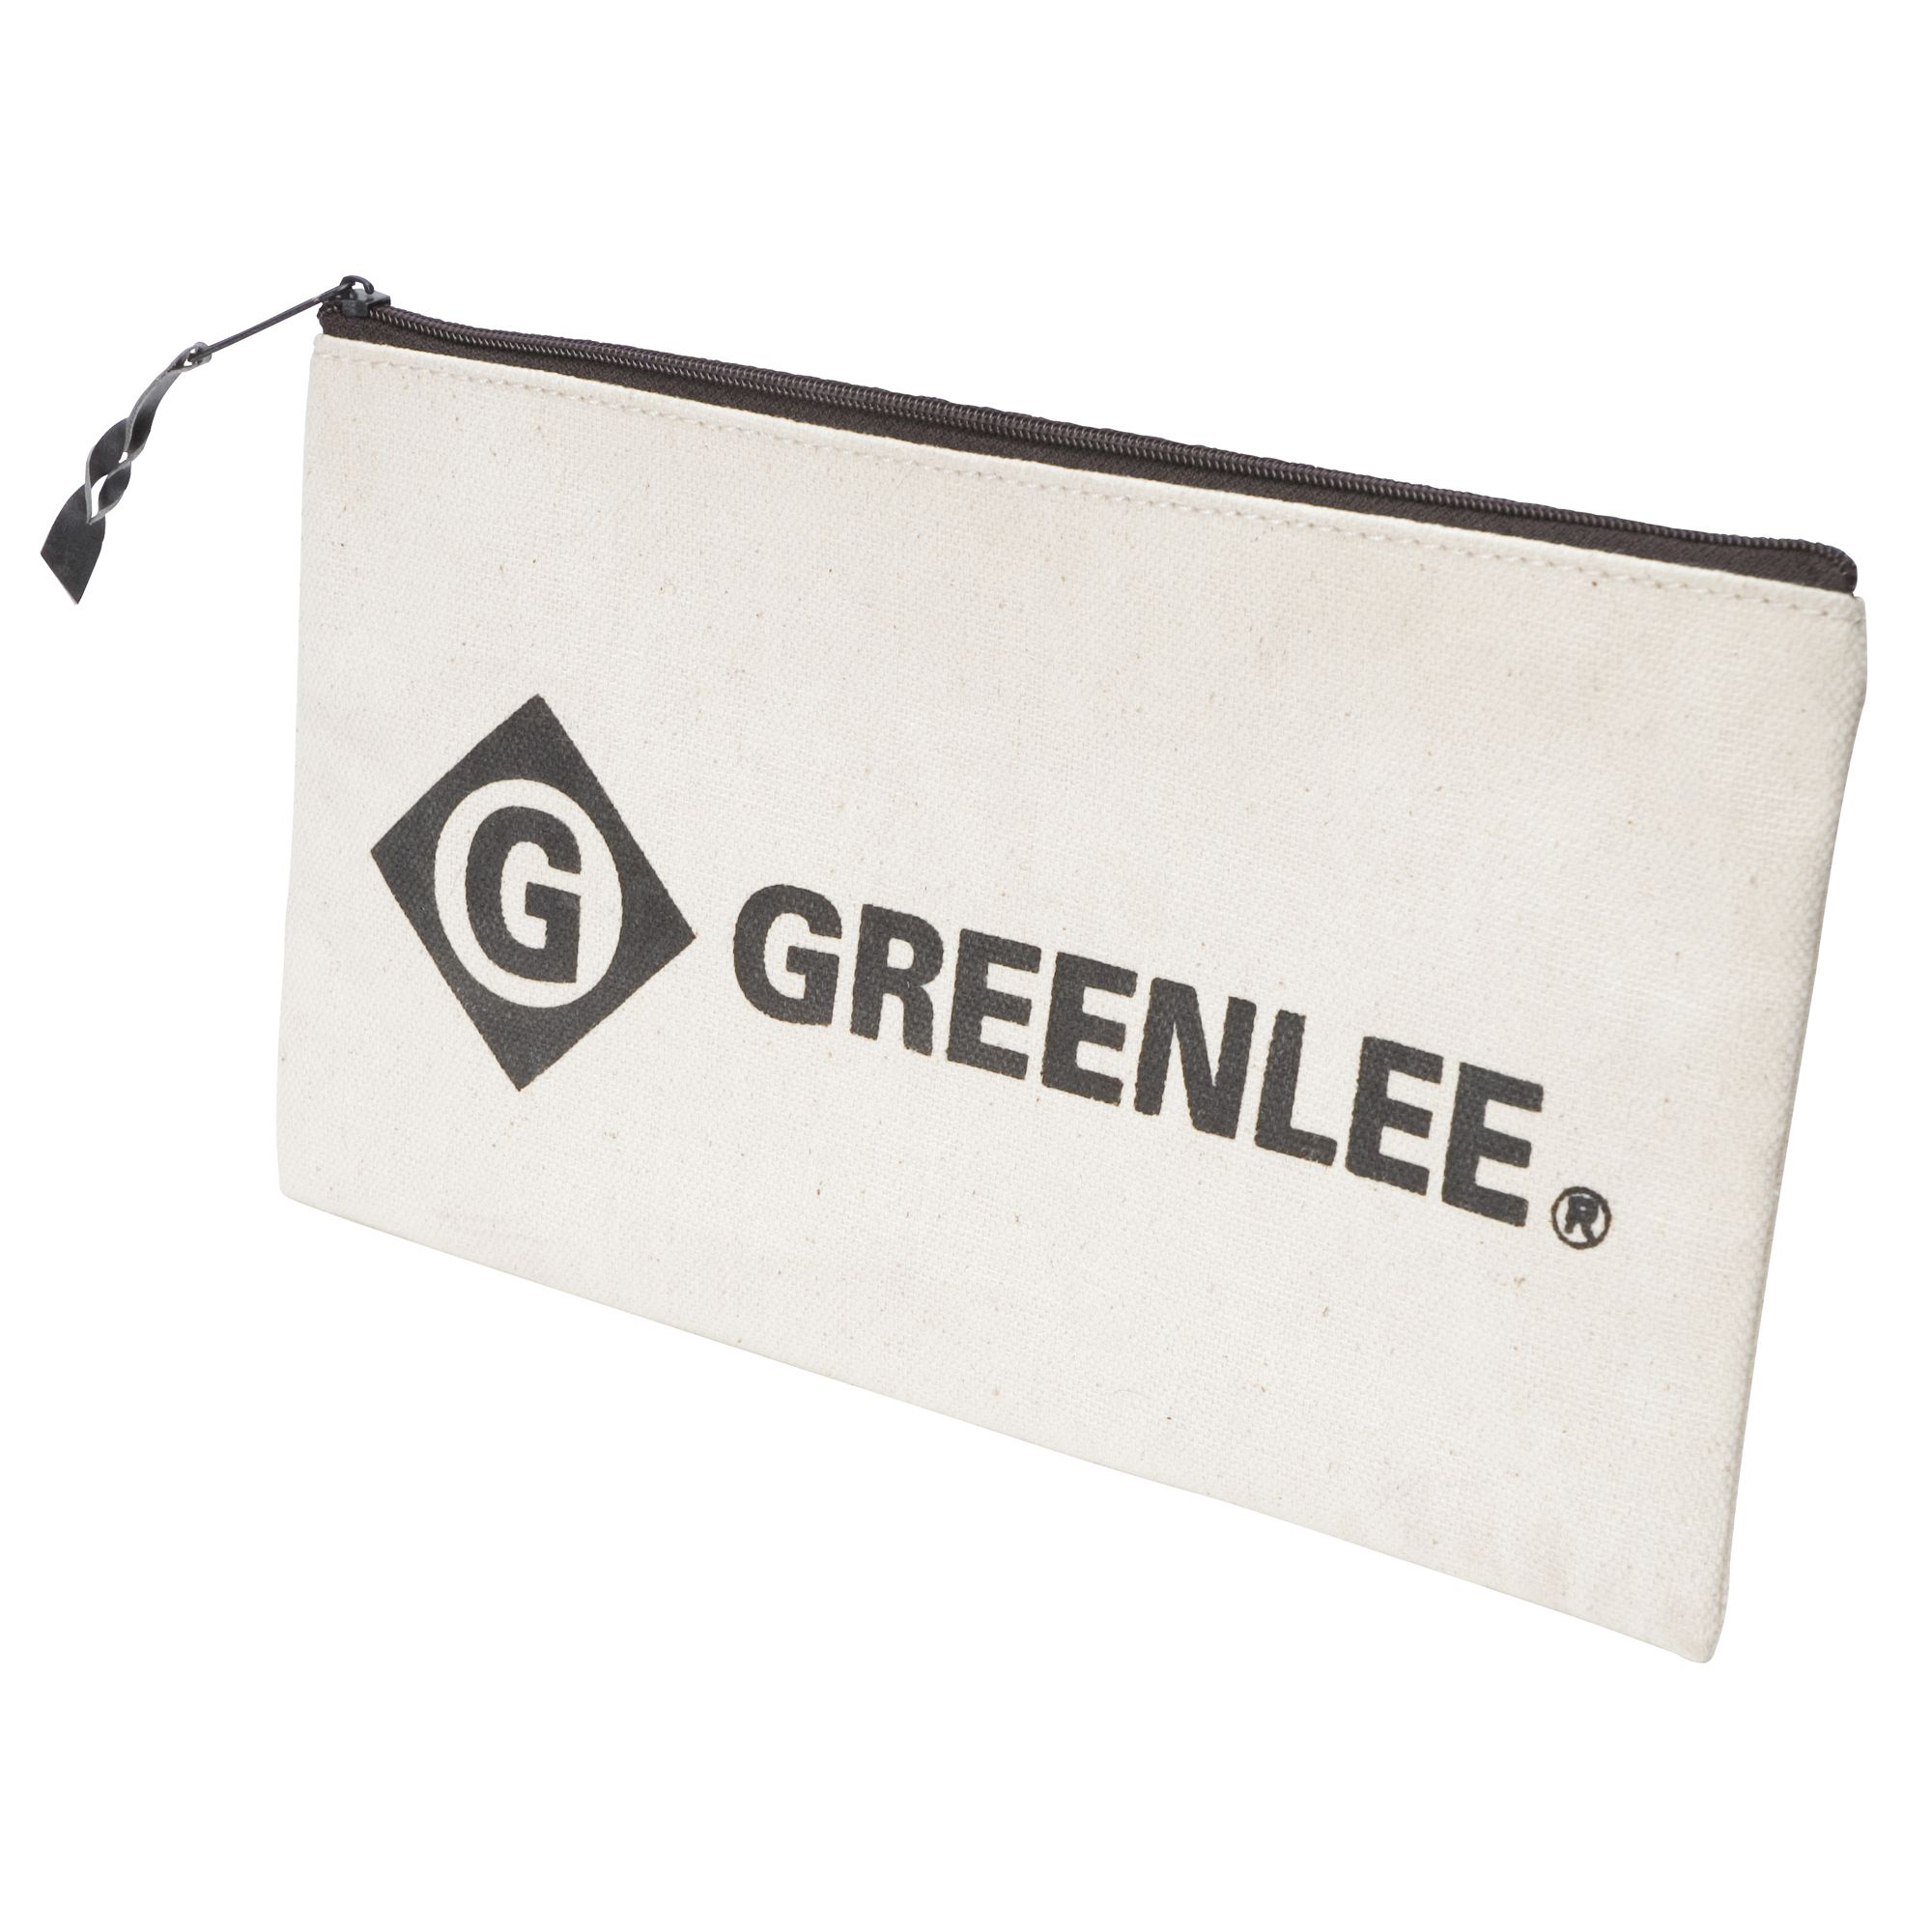 Greenlee 12 in. Canvas Zipper Bag